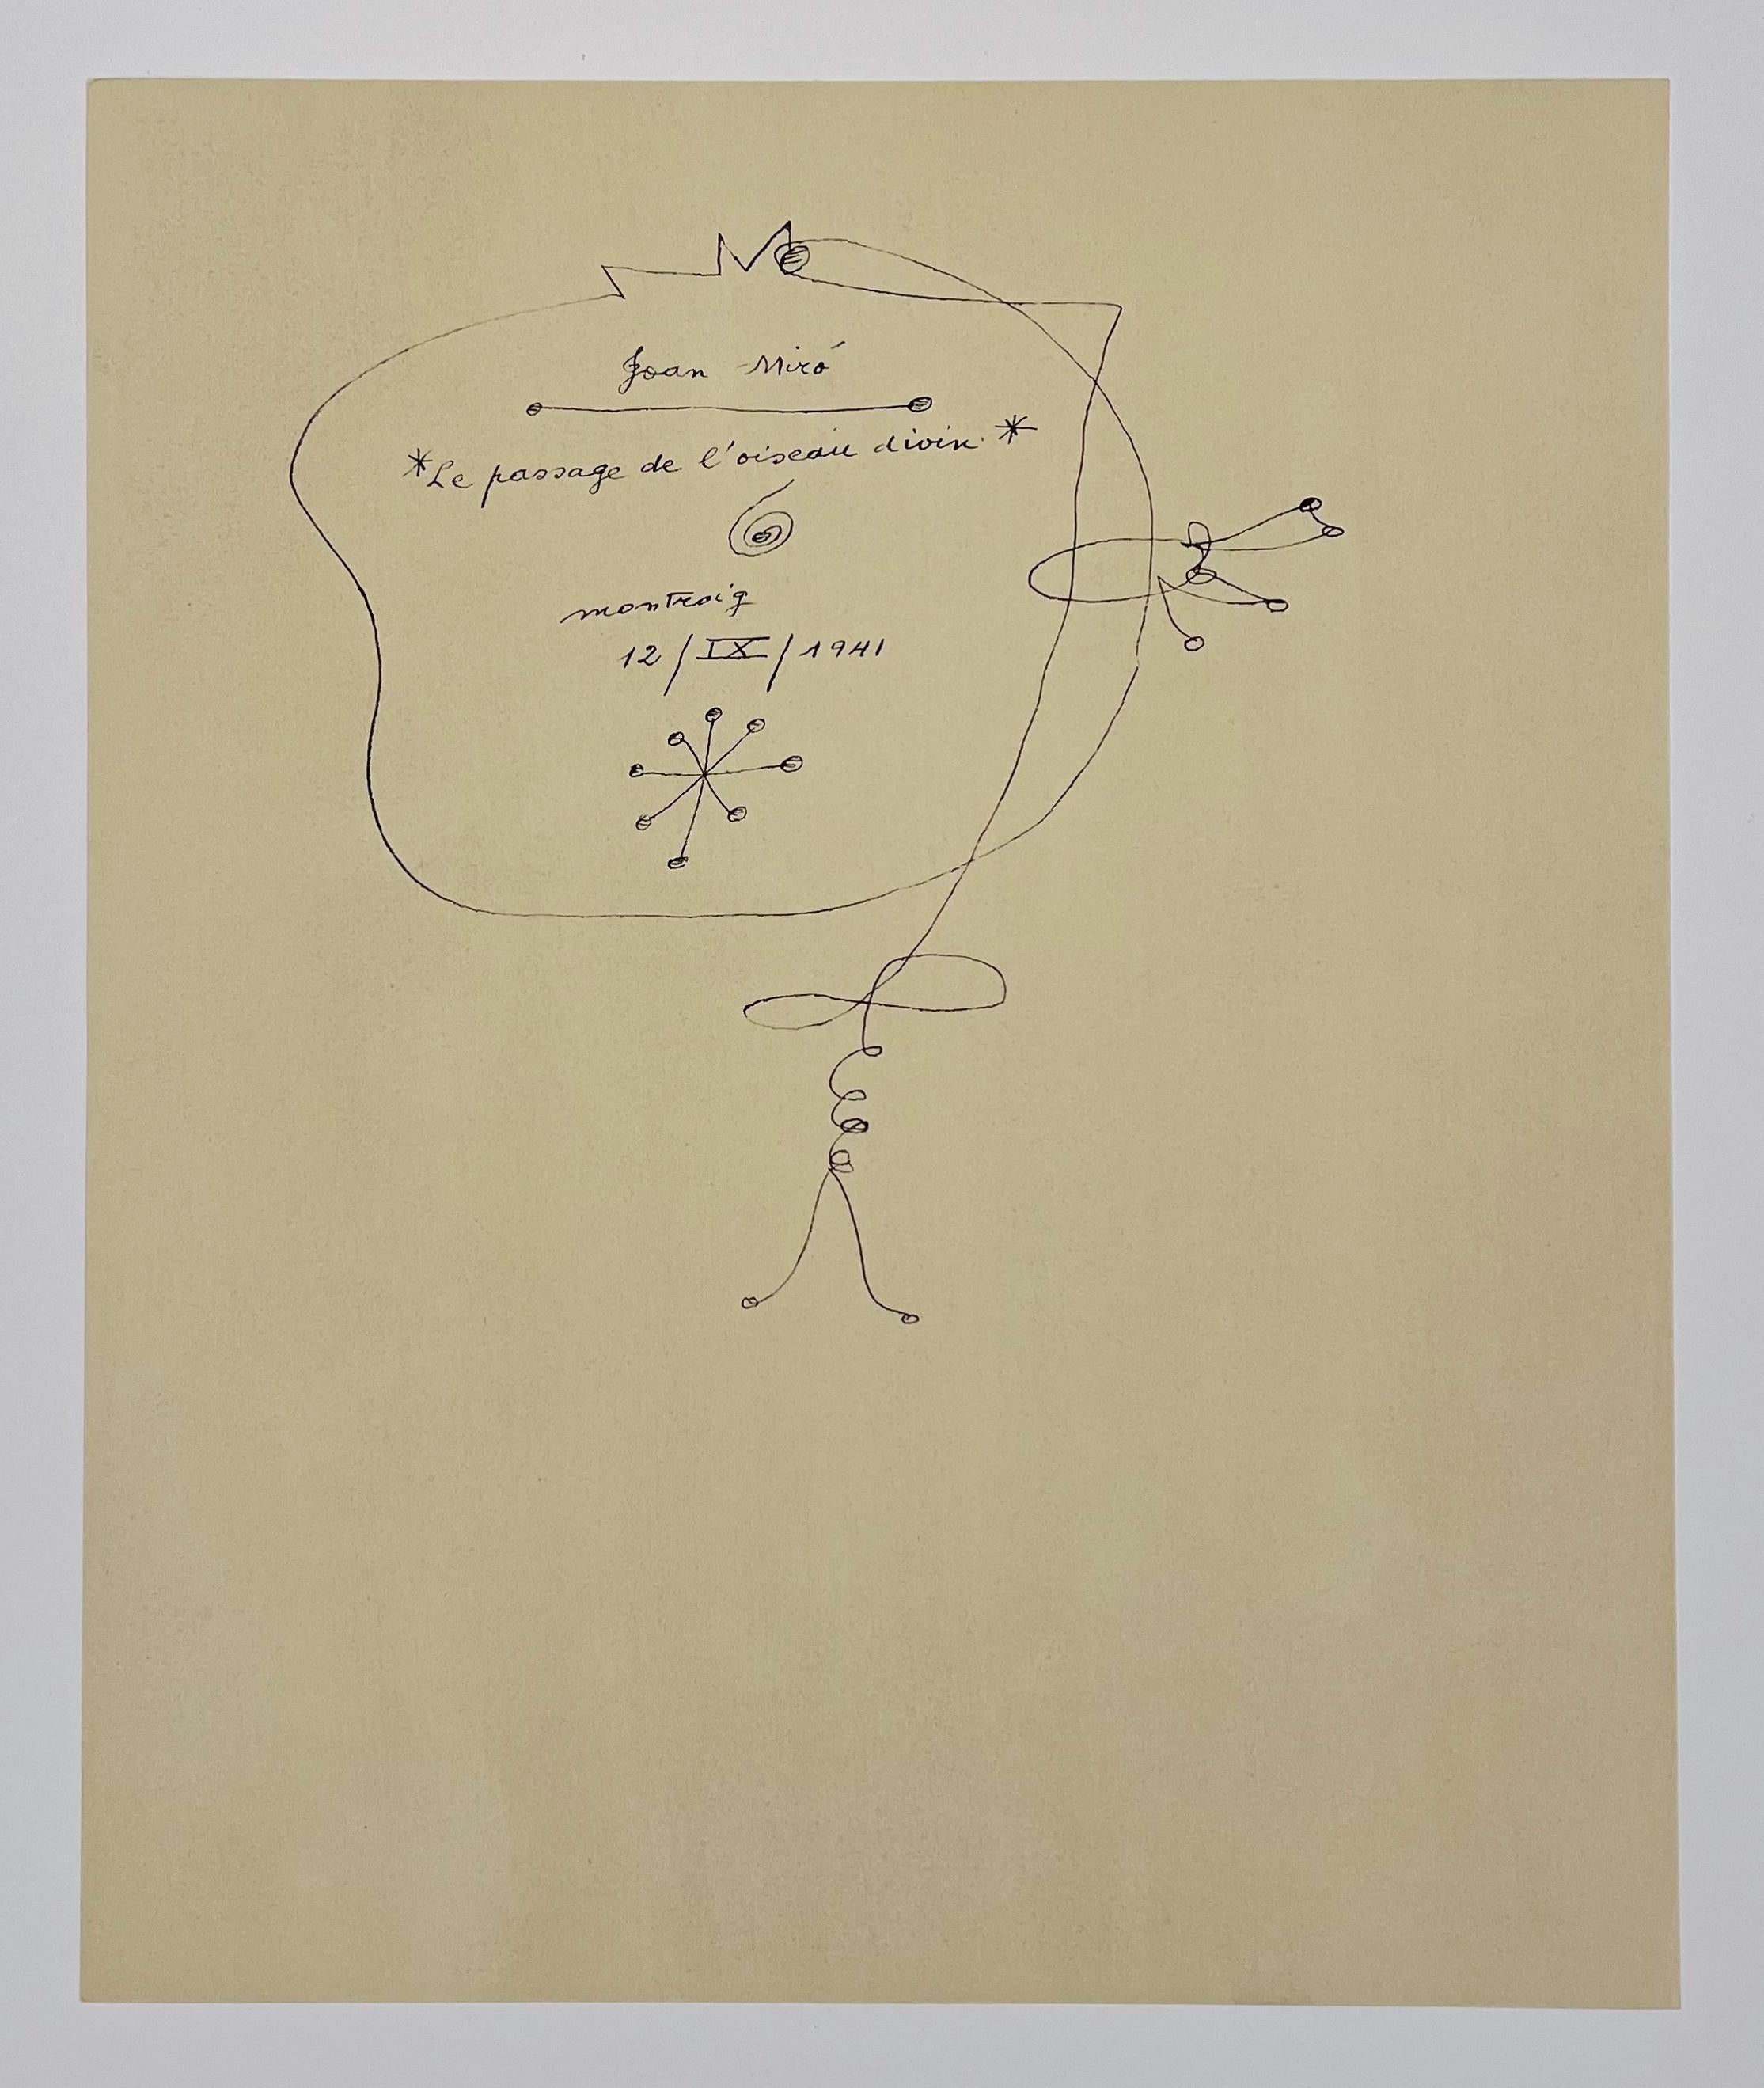 Artist: Joan Miro (after)
Title: Le passage du l'oiseau divin (The Passage of the Divine Bird), Plate XXII
Portfolio: 1959 Constellations
Medium: Original pochoir
Date: 1959
Edition: 350
Frame Size: 22 1/4